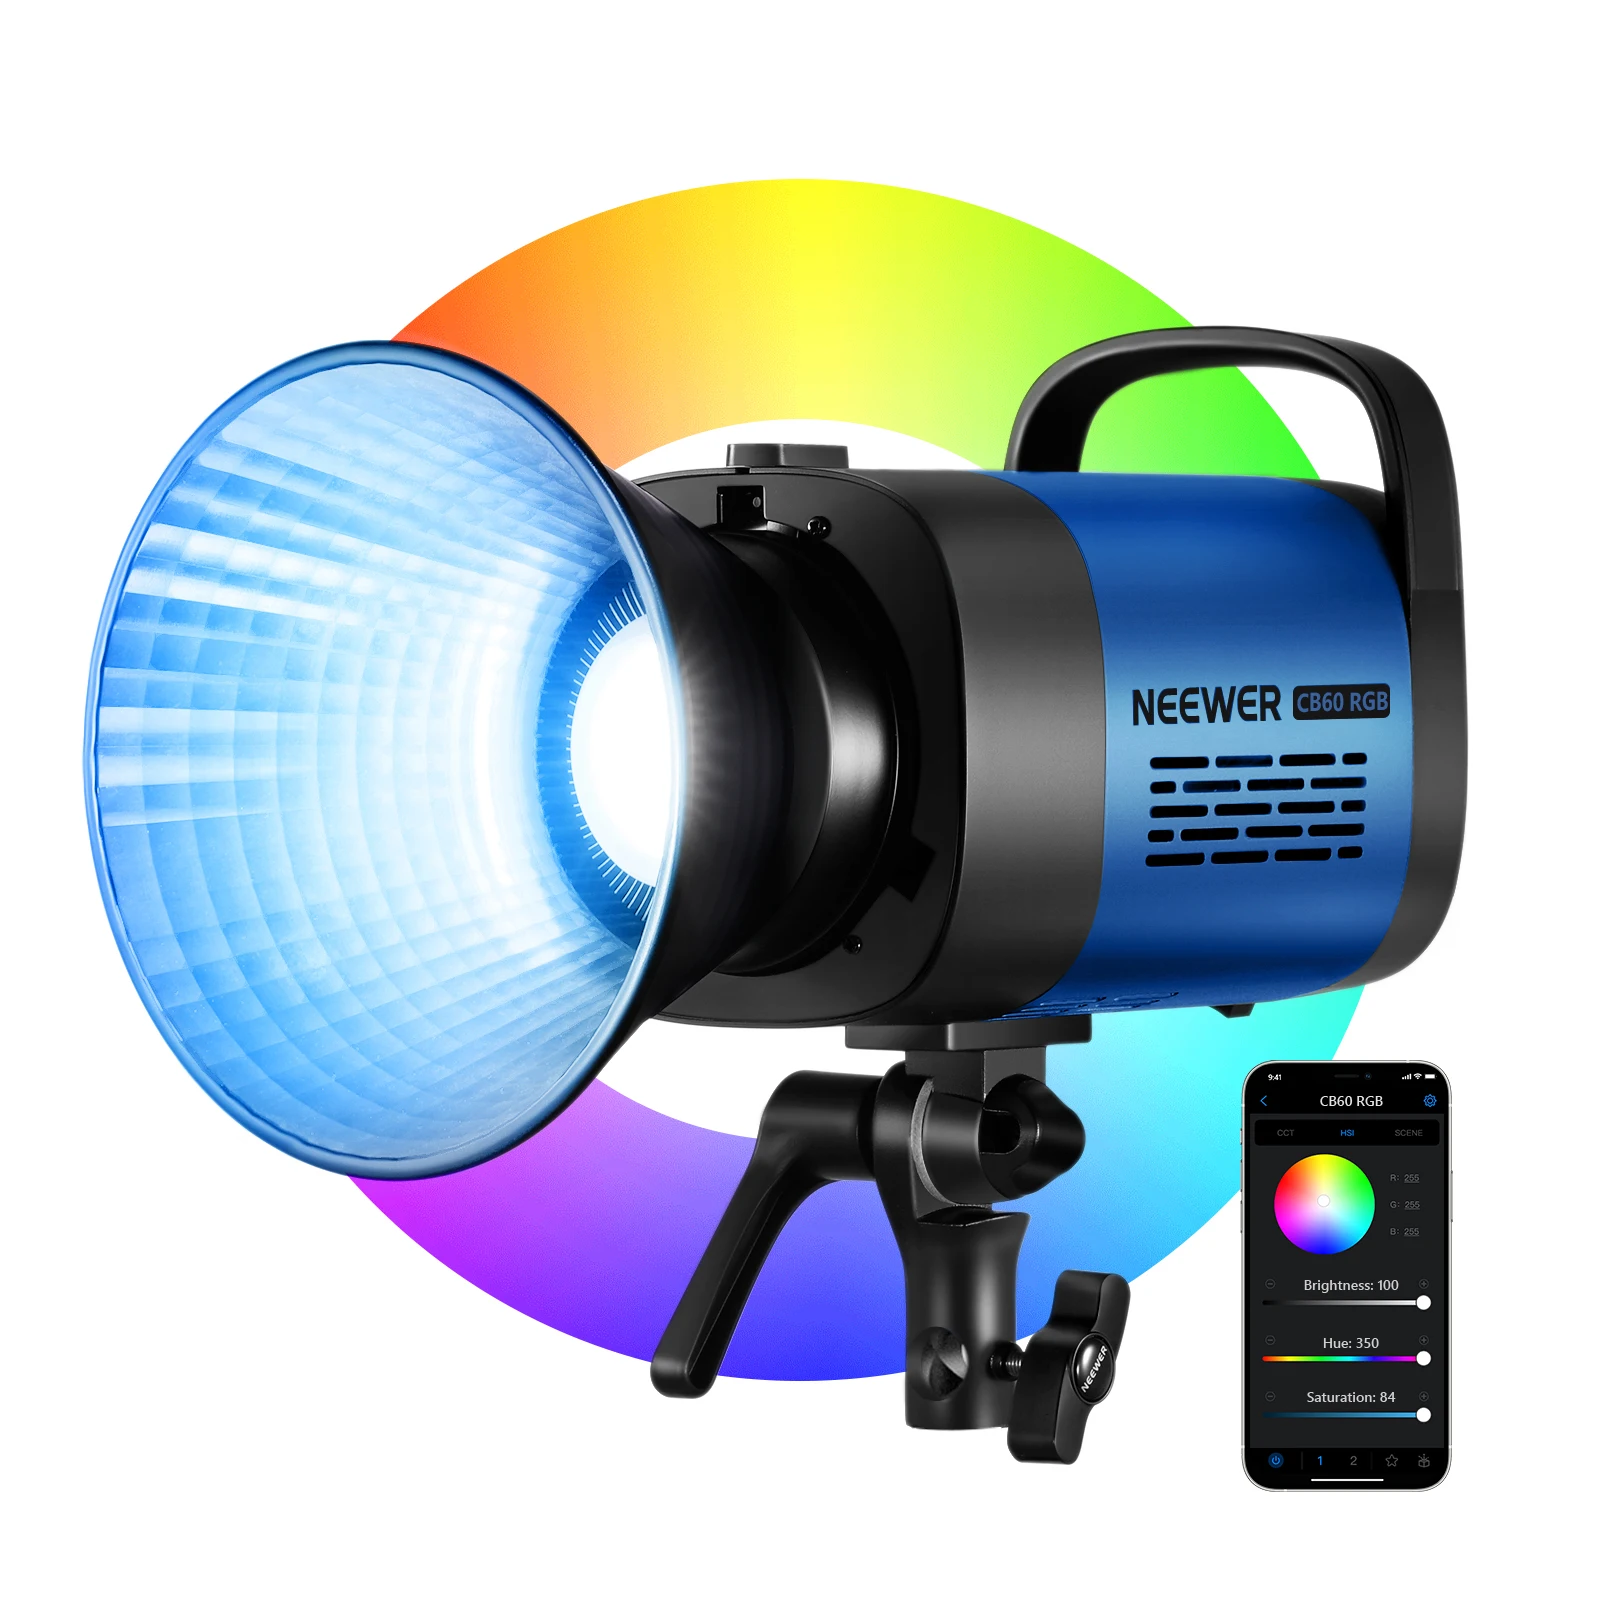 

NEEWER LED Video Light Bowens Mount RGB CB60 70W, RGB Full Color 18000 Lux@1m CCT 2700K~6500K CRI 97+ 17 Lighting Scenes App